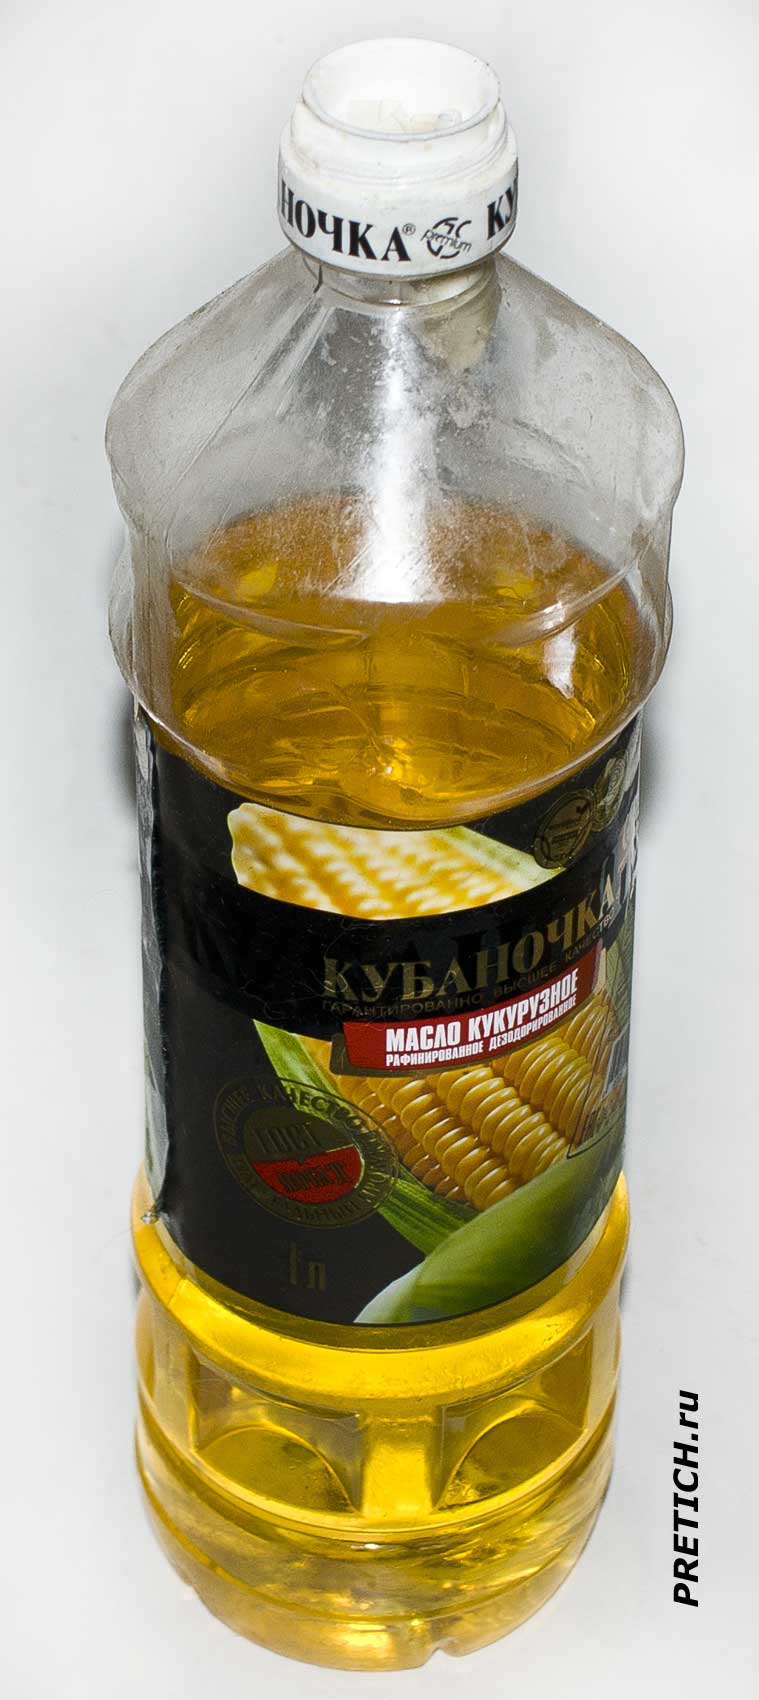 Отзыв и описание на Кубаночка масло кукурузное от Гранд-Стар из Краснодара